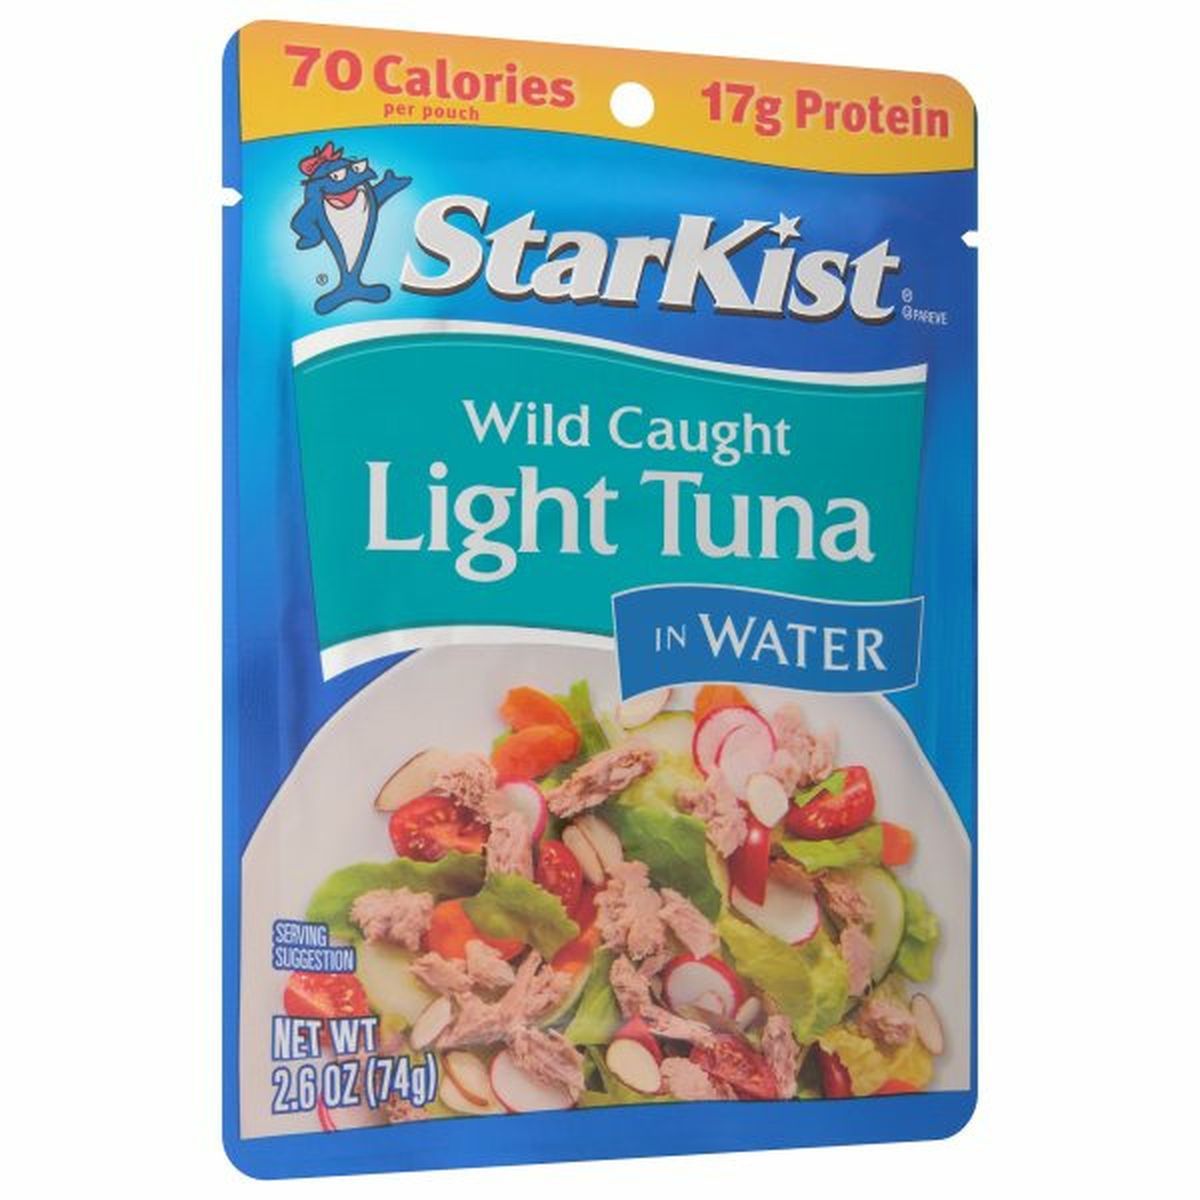 Calories in StarKist Tuna, Light, Wild Caught, in Water